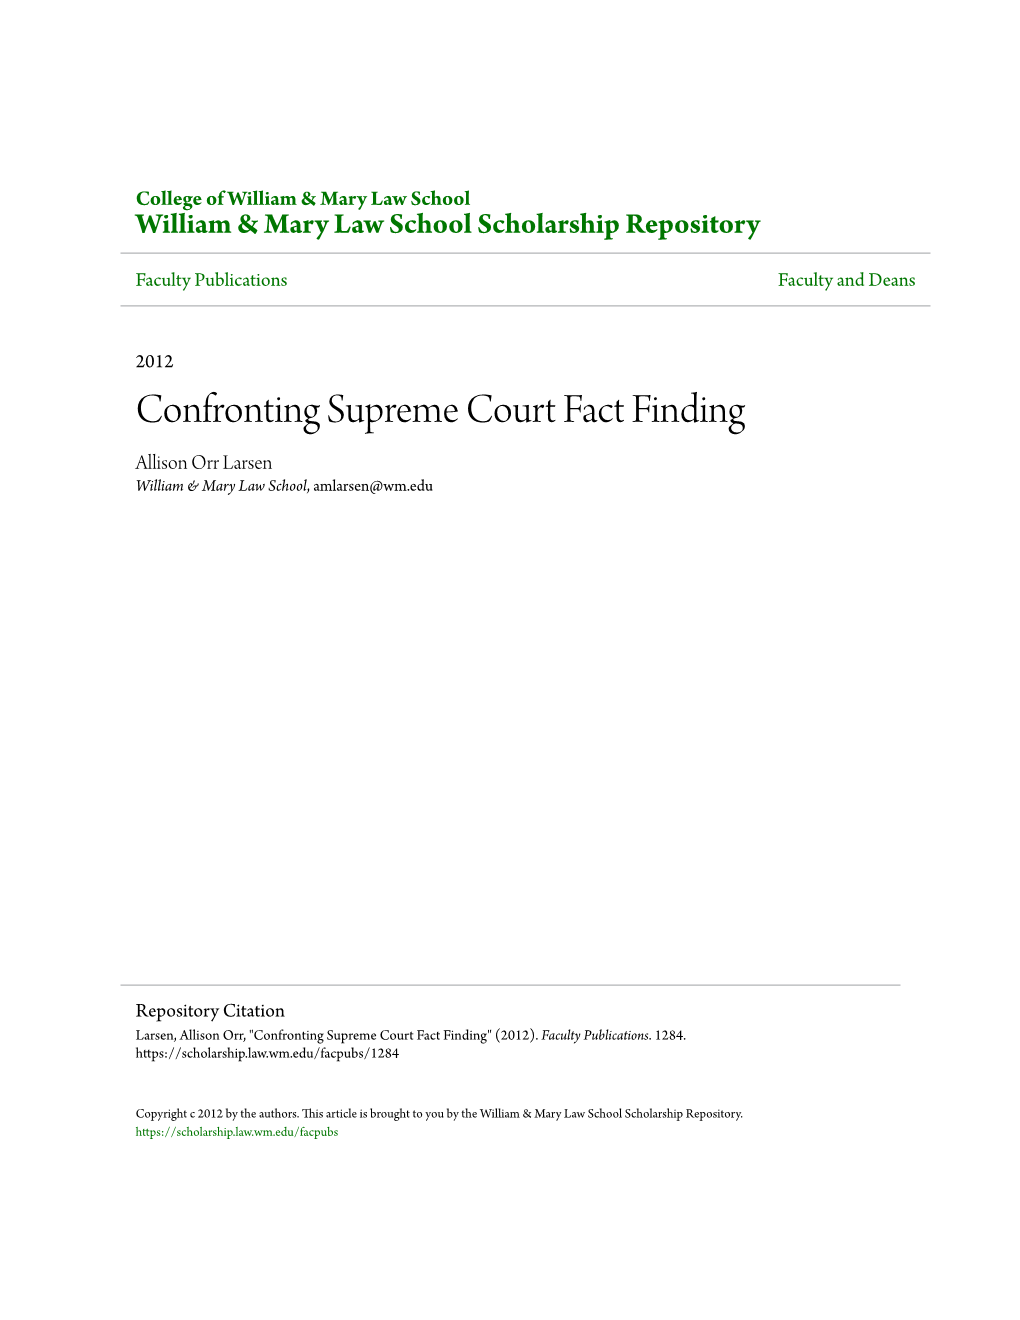 Confronting Supreme Court Fact Finding Allison Orr Larsen William & Mary Law School, Amlarsen@Wm.Edu